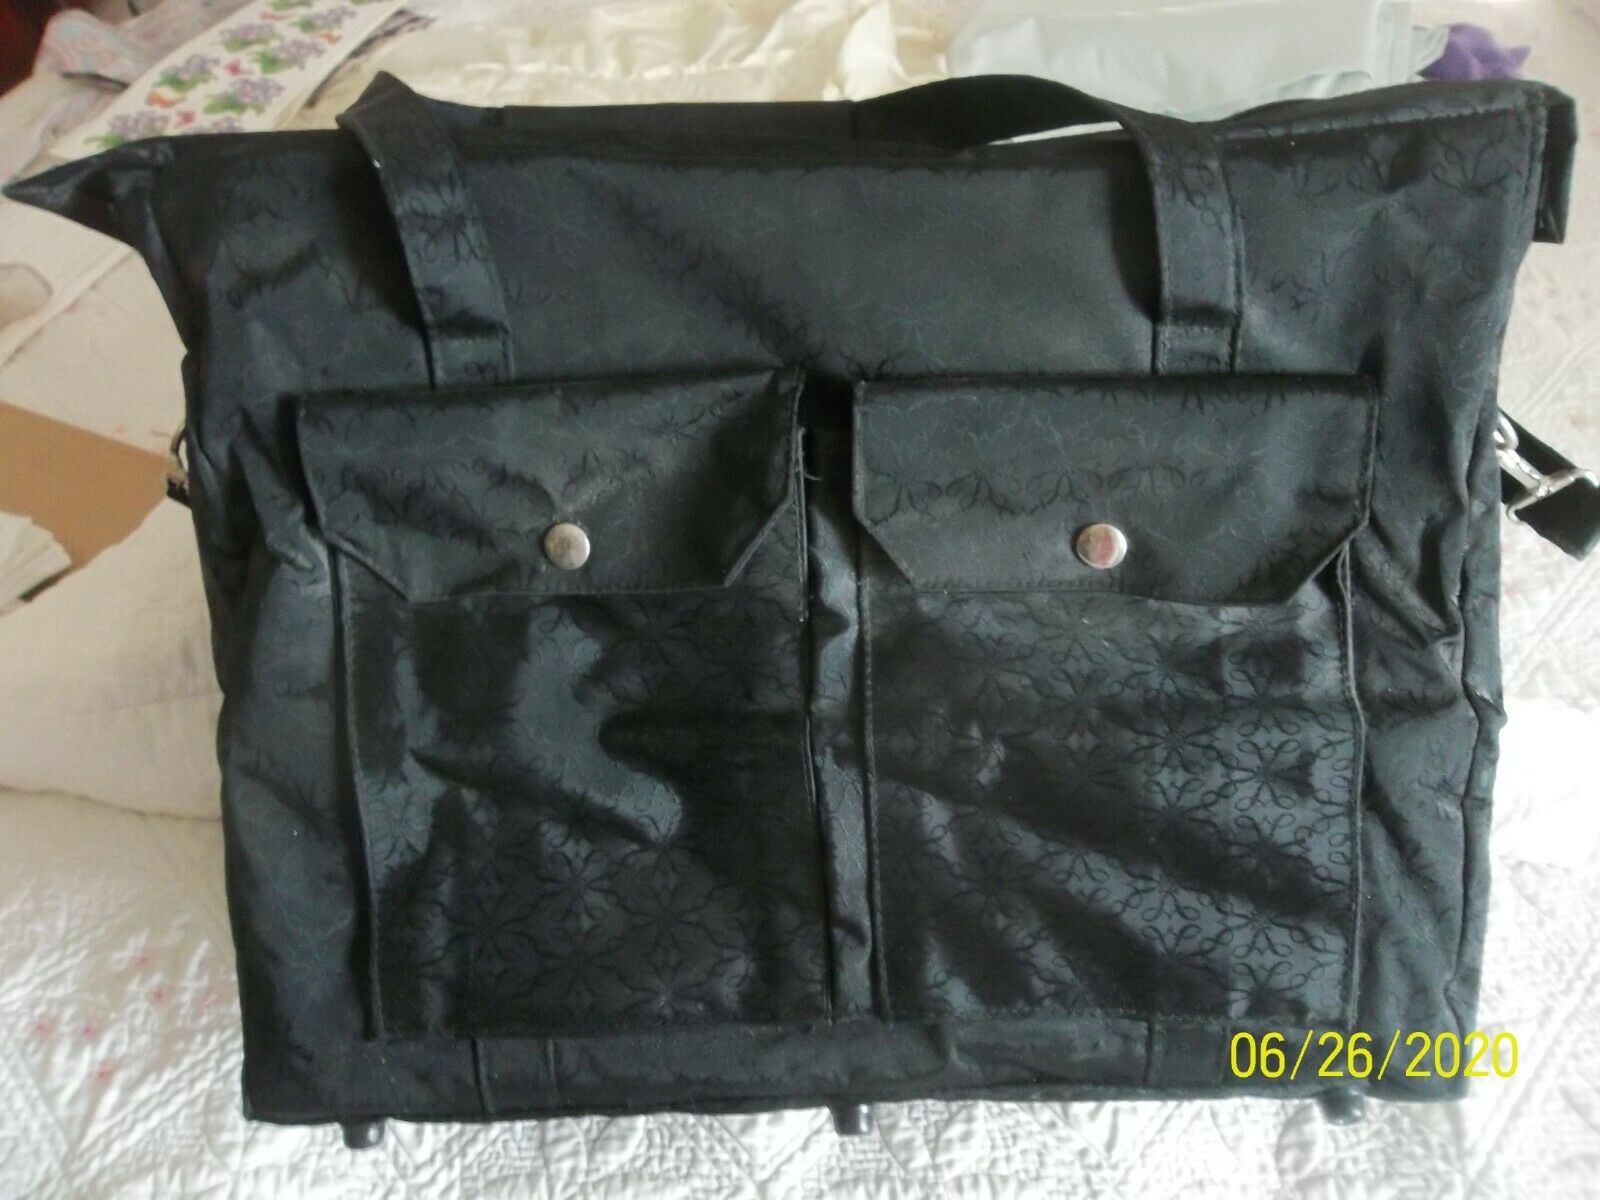 Avon Representative Large Jewelry Carry Storage Show Bag Tote Zipper Lots Pocket